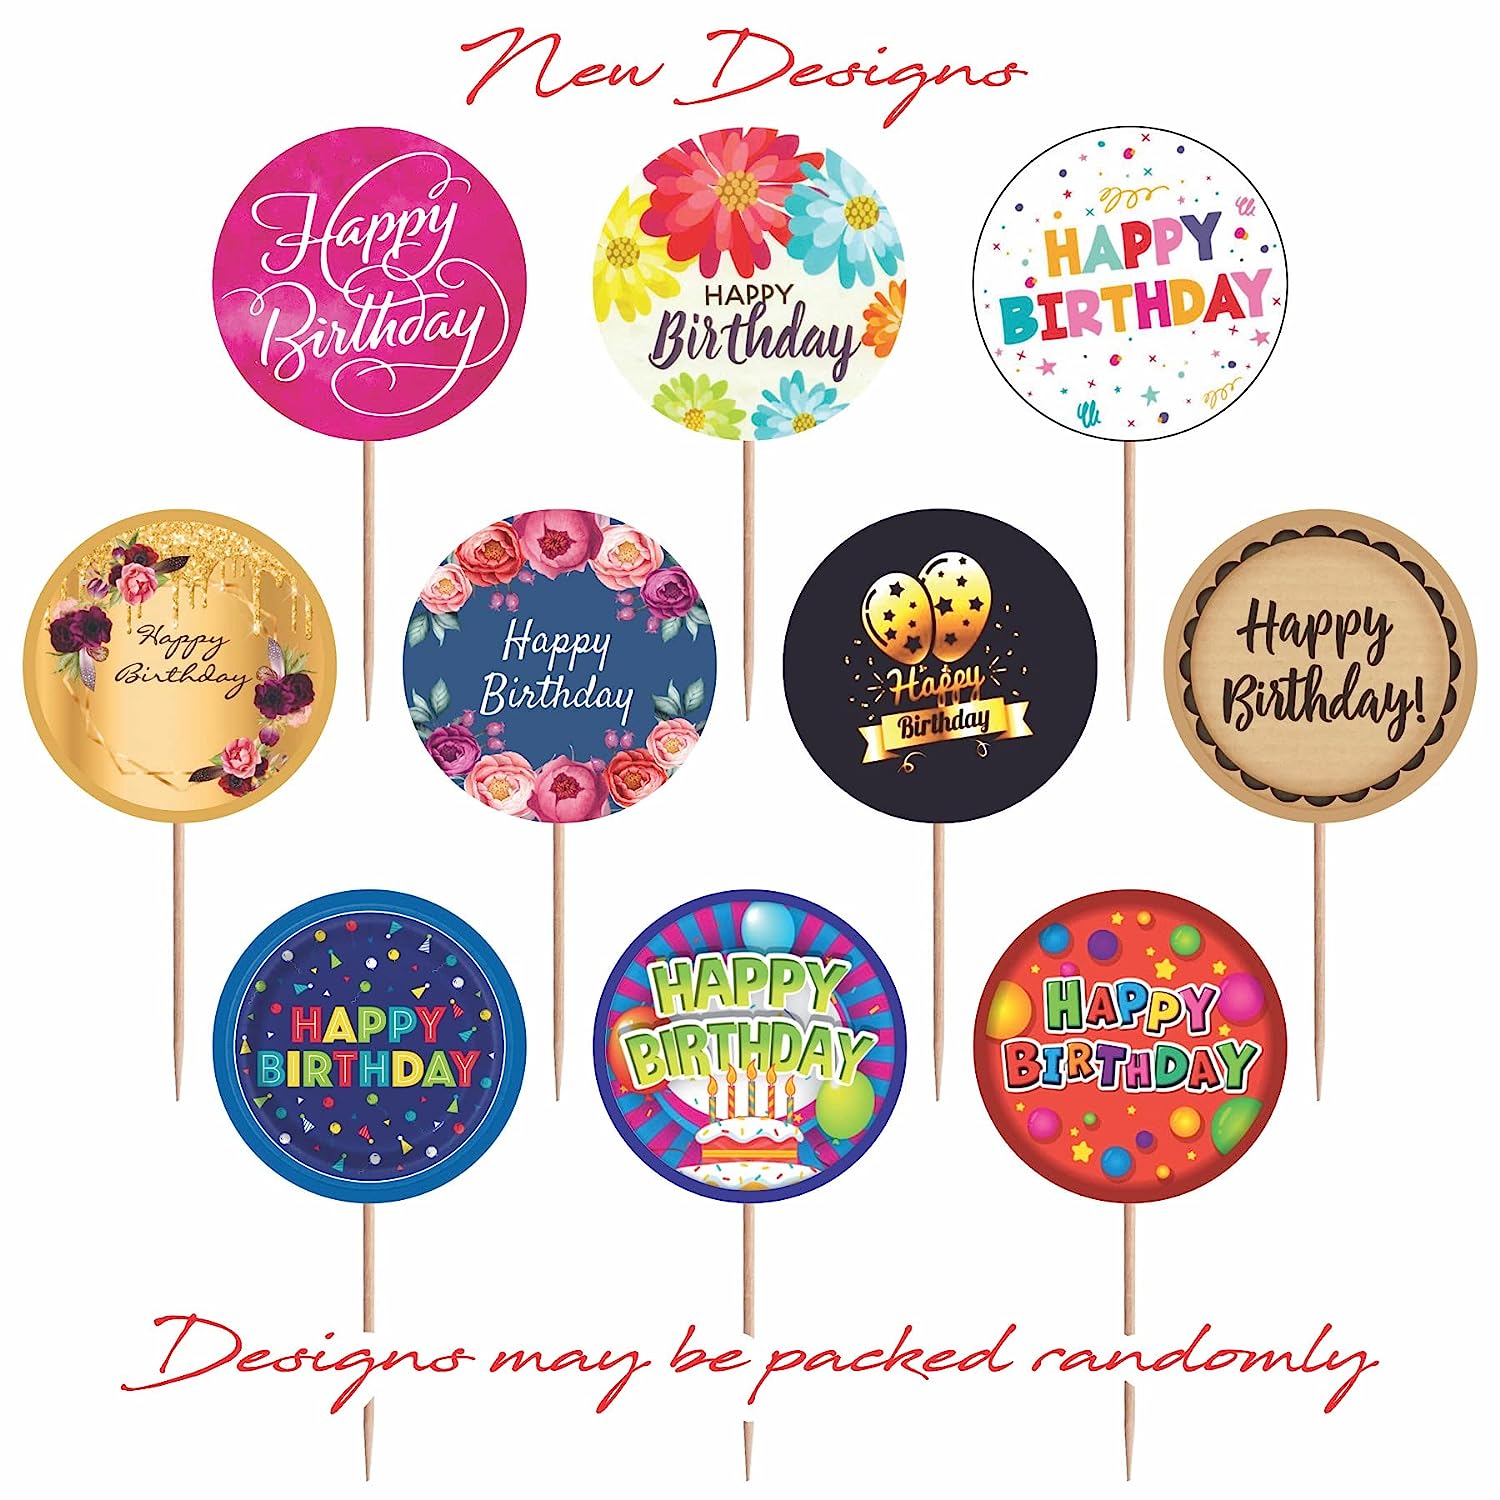 Happy Birthday Cupcake stickers